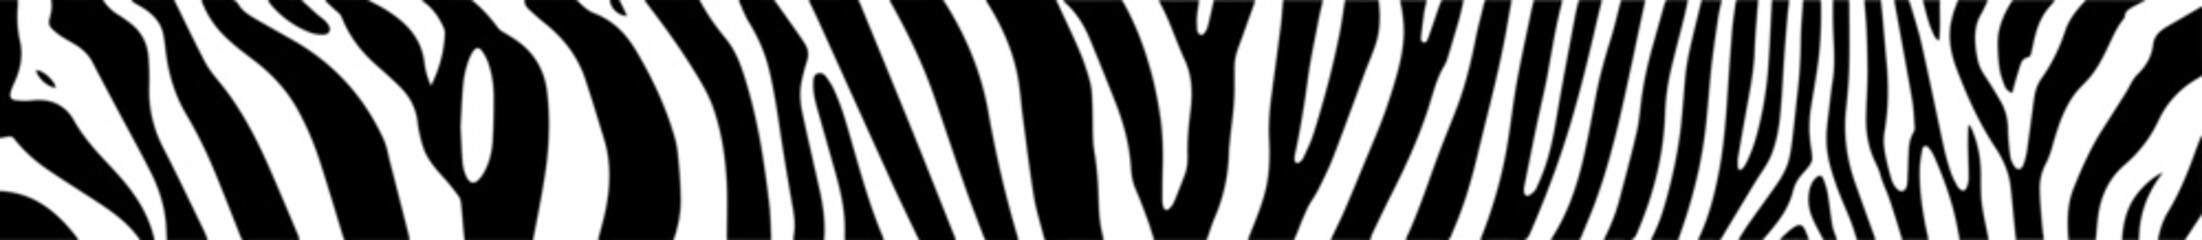 zebra stripes black pattern silhouette overlay vector, shape print, monochrome clipart illustration, laser cutting engraving nocolor